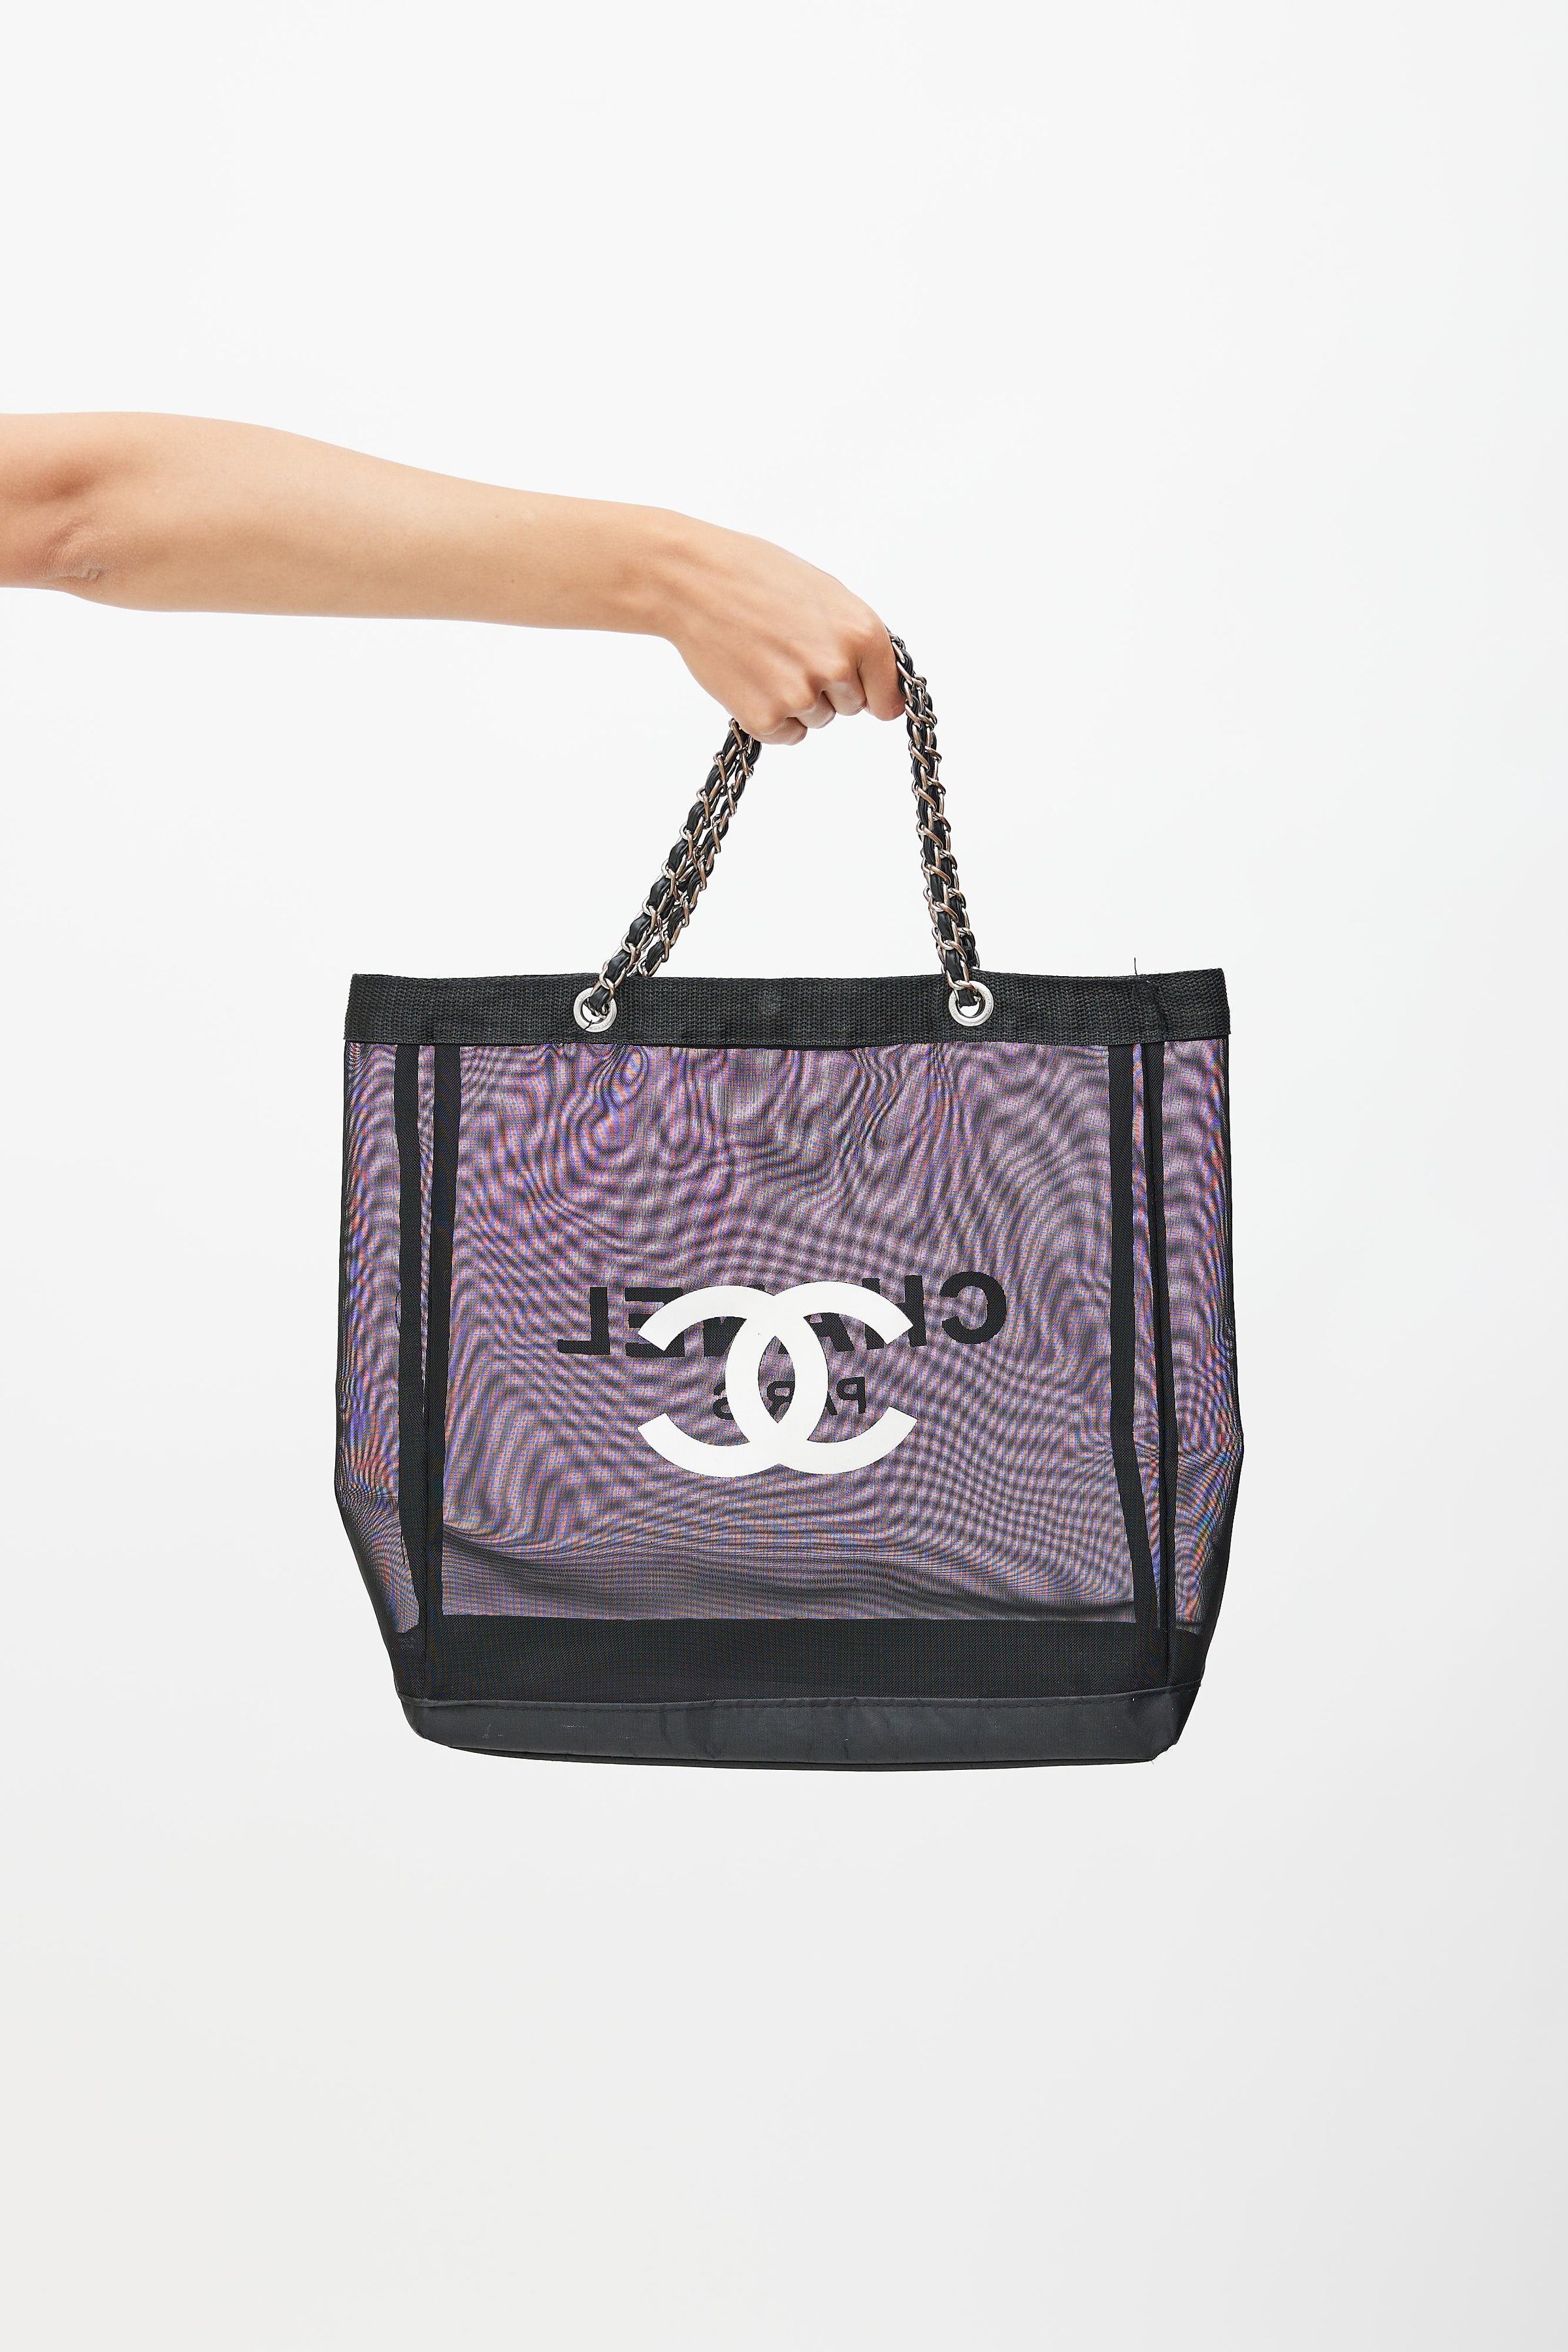 Shop Chanel Vip Tote Bag